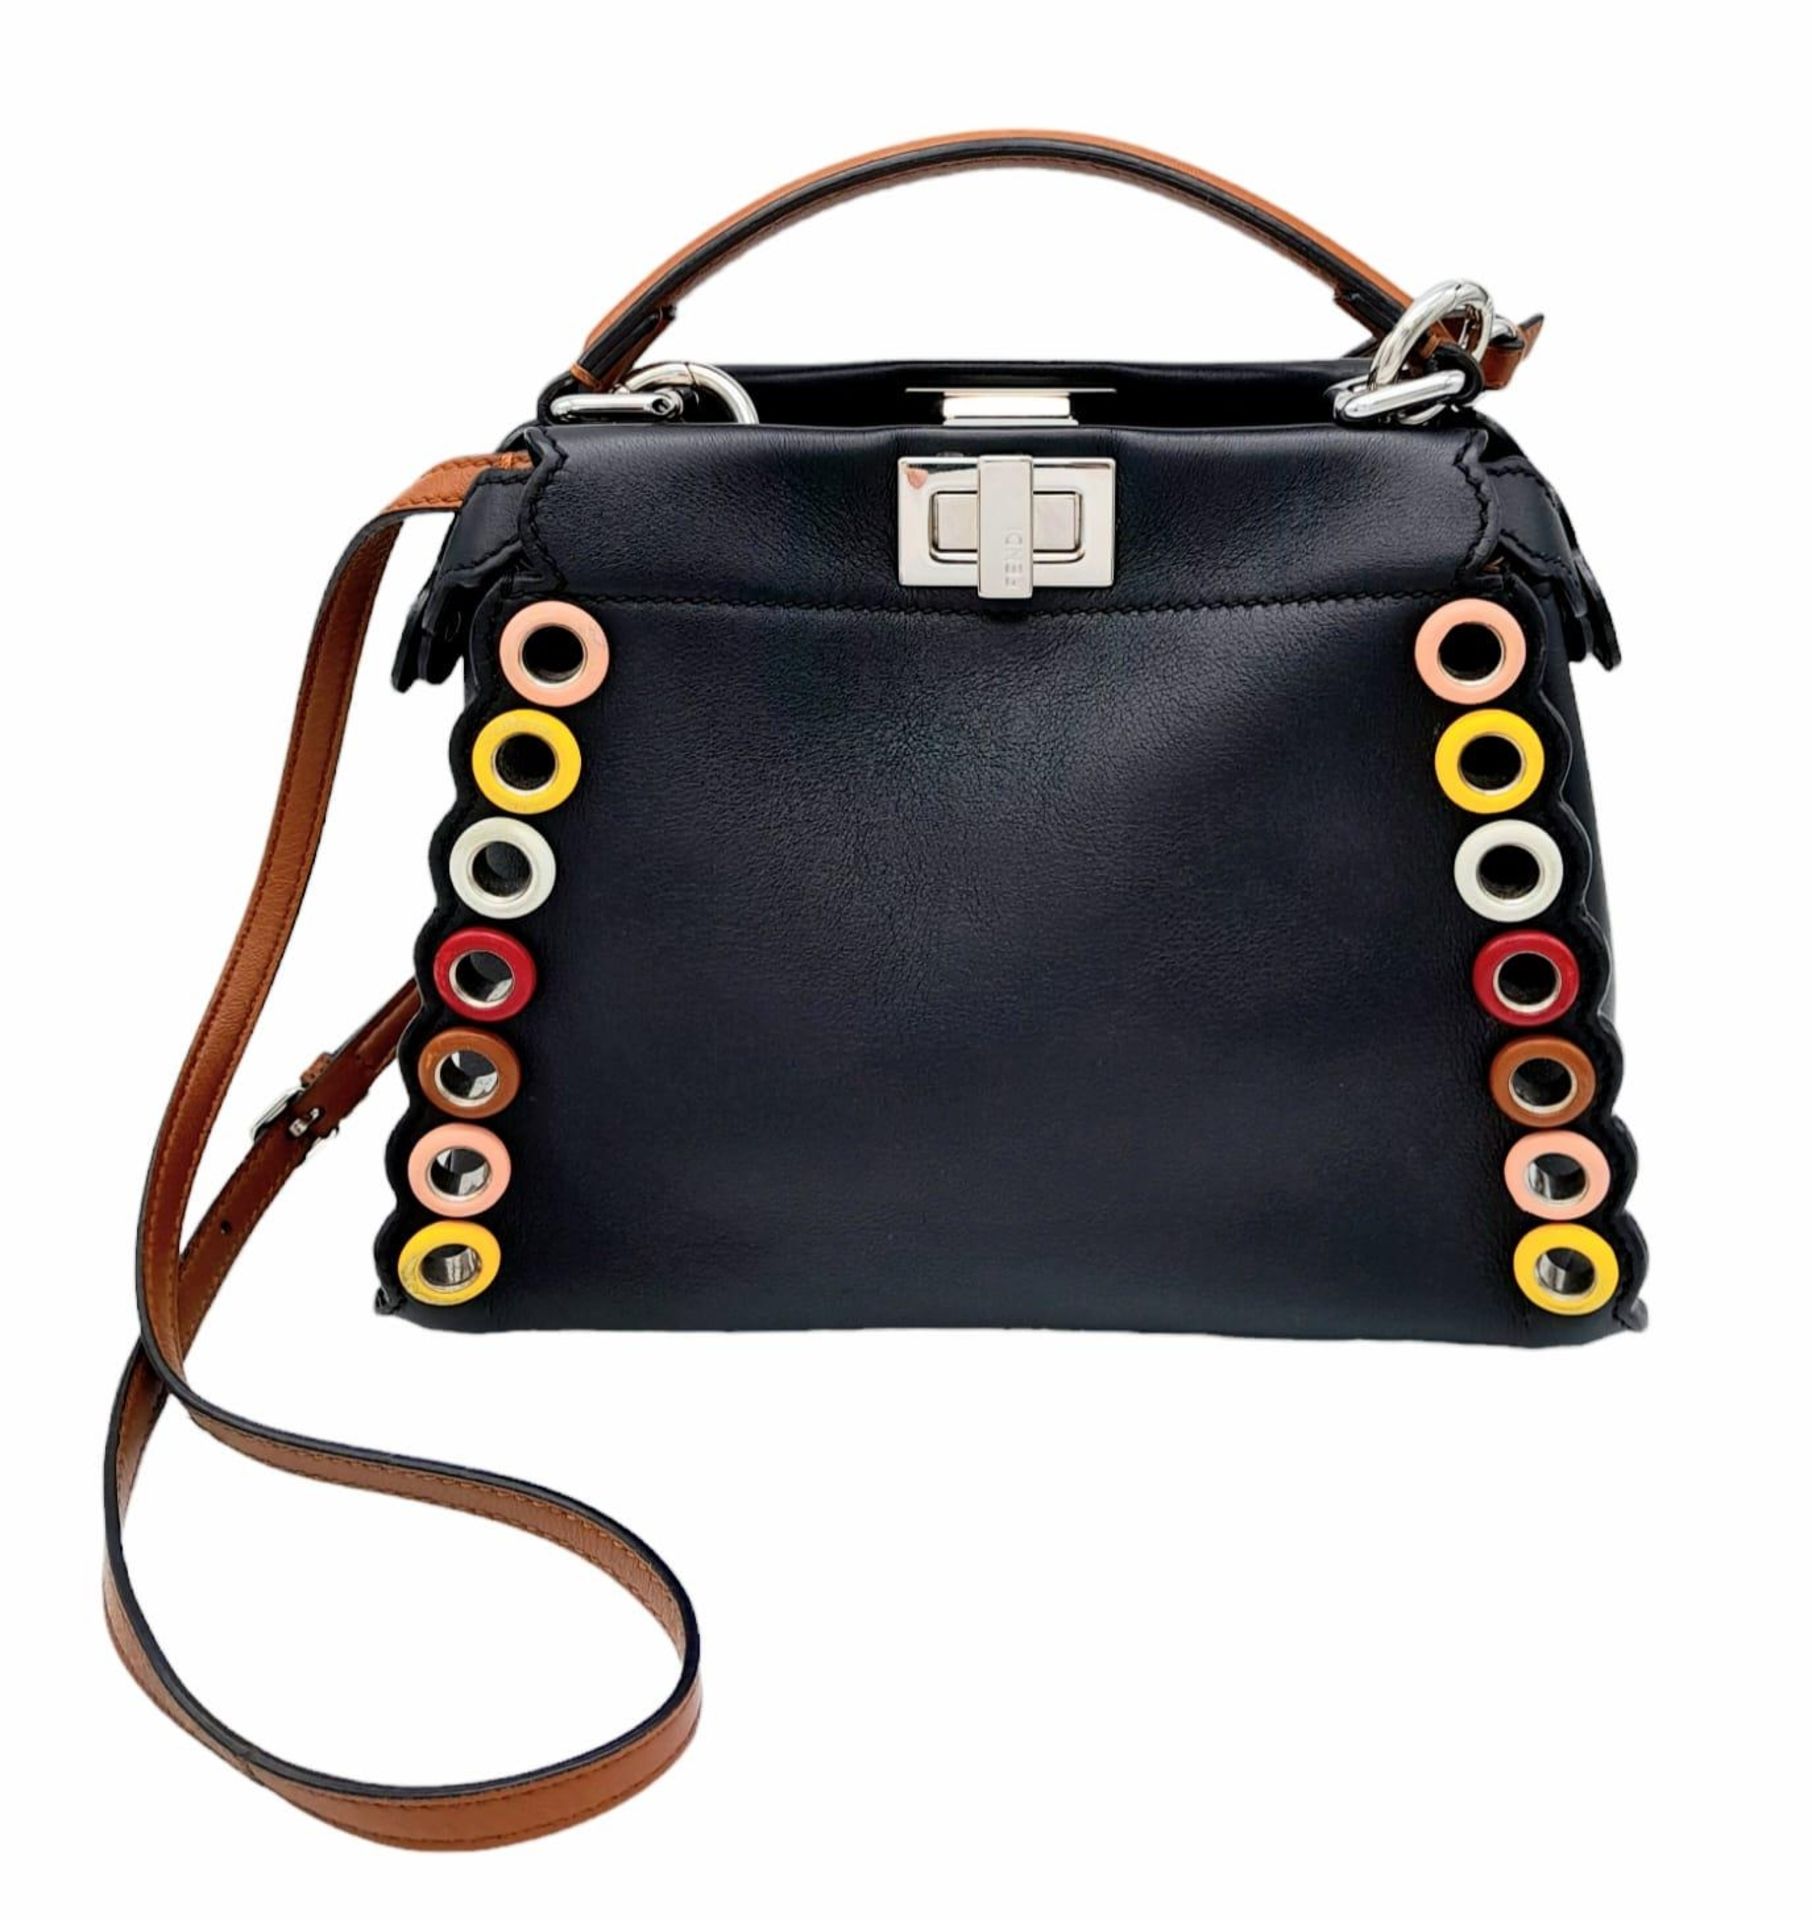 A Fendi Nappa scalloped grommet mini peakaboo satchel bag in black and multicolour. Black leather